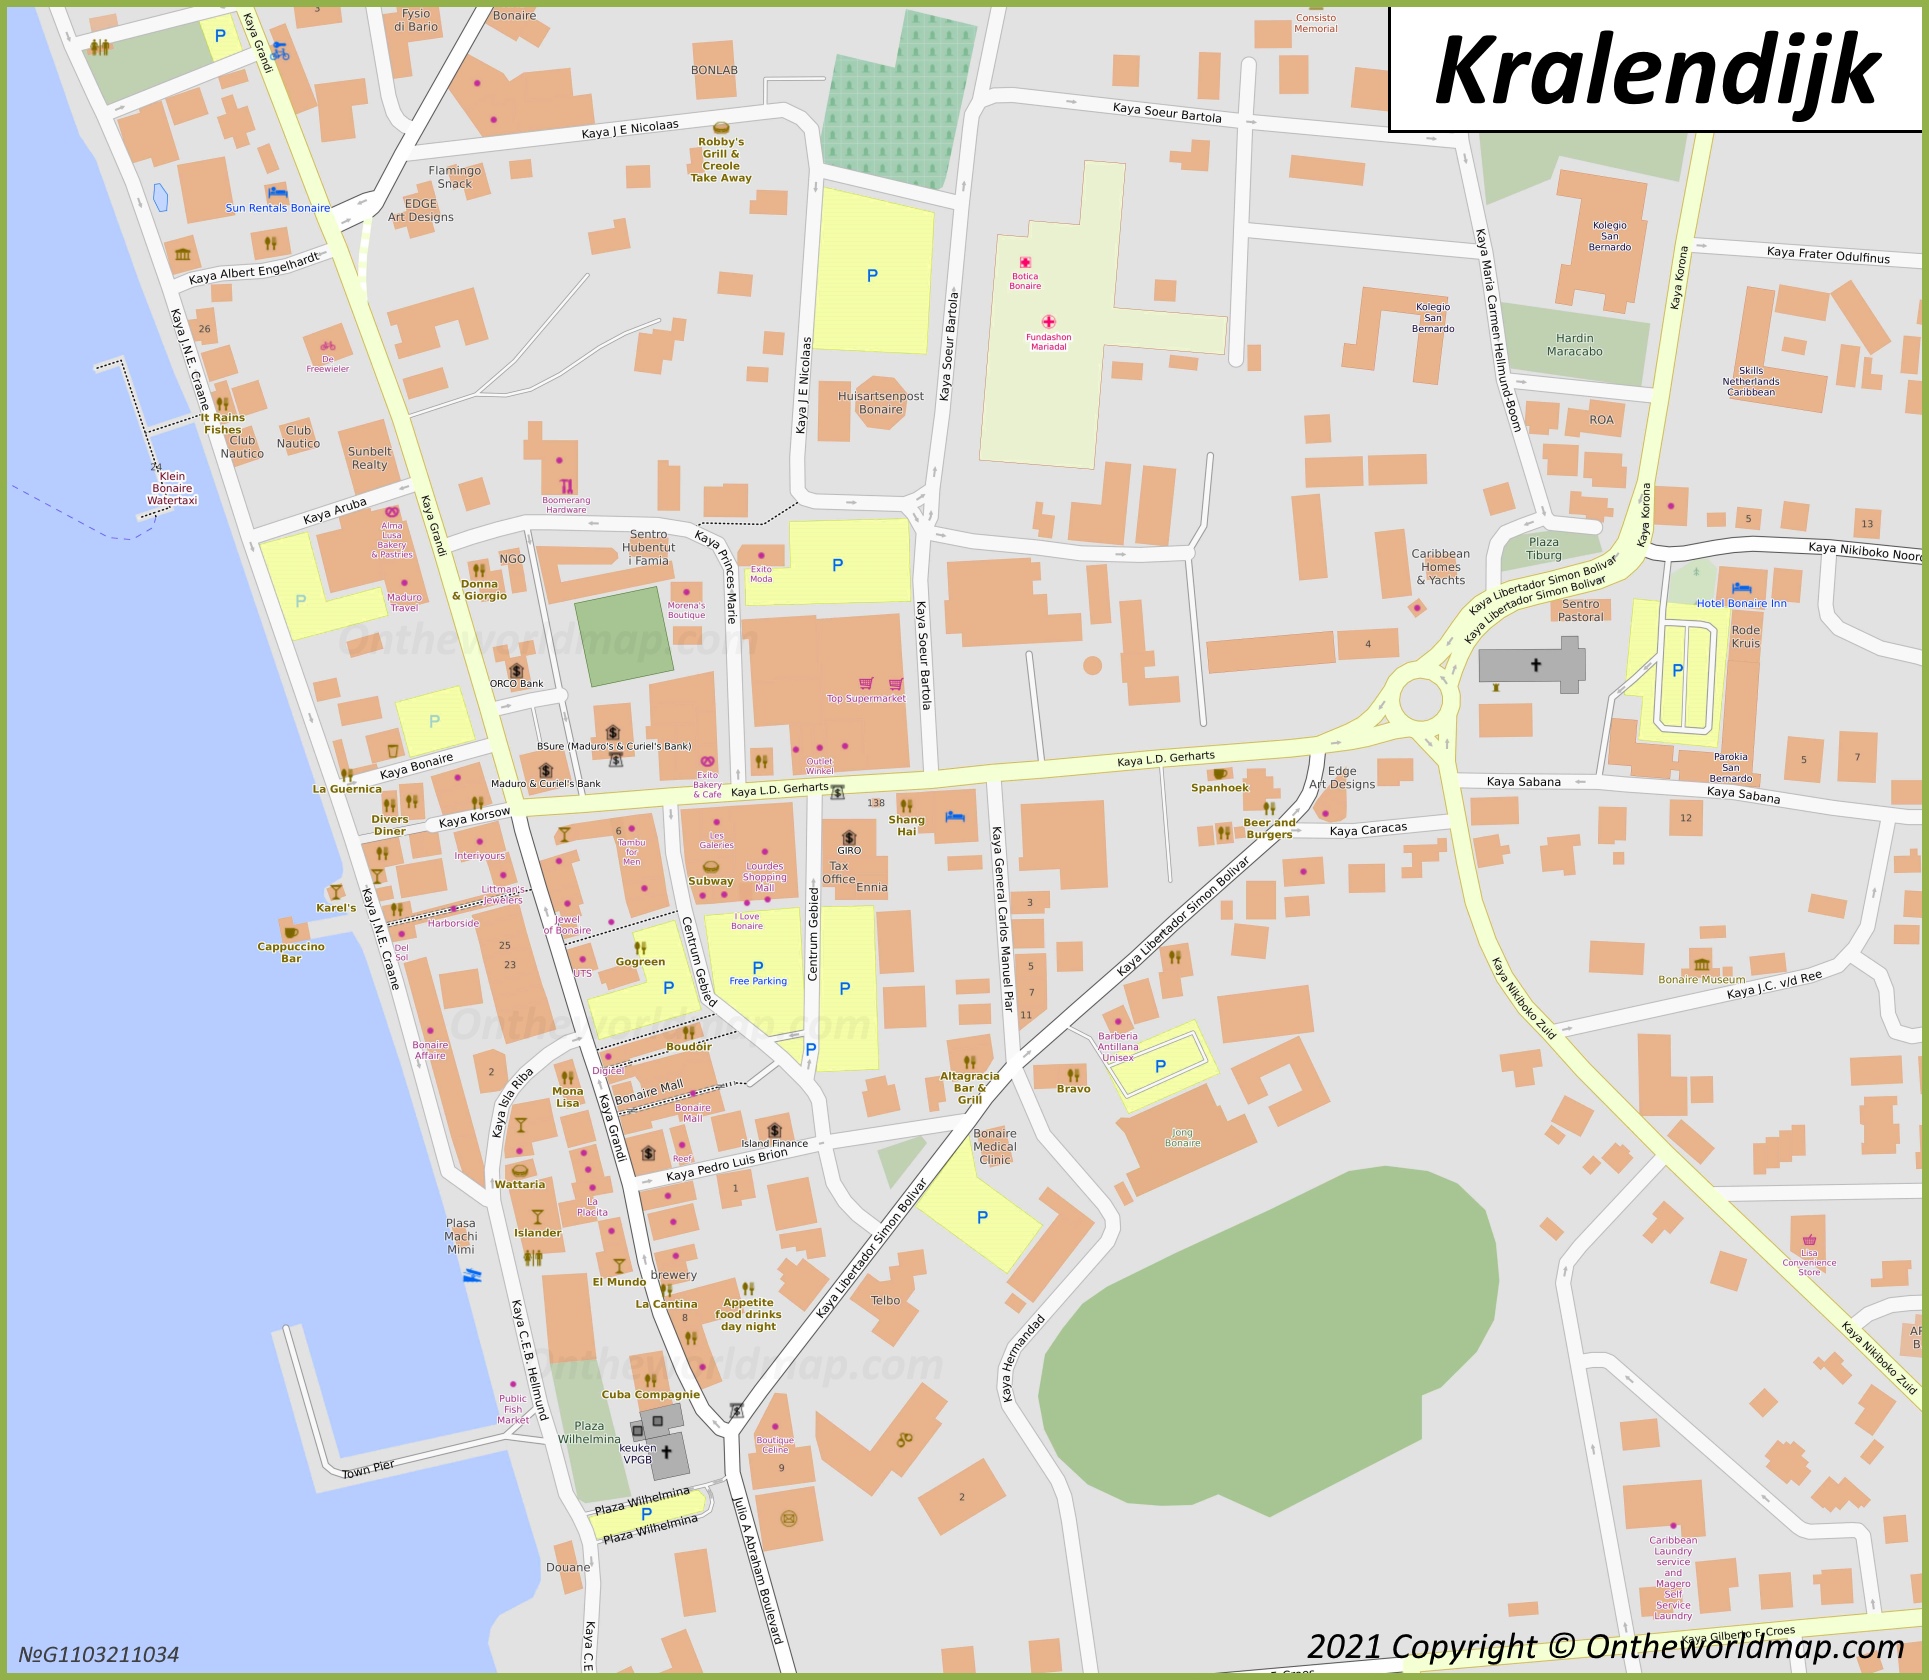 Kralendijk City Center Map